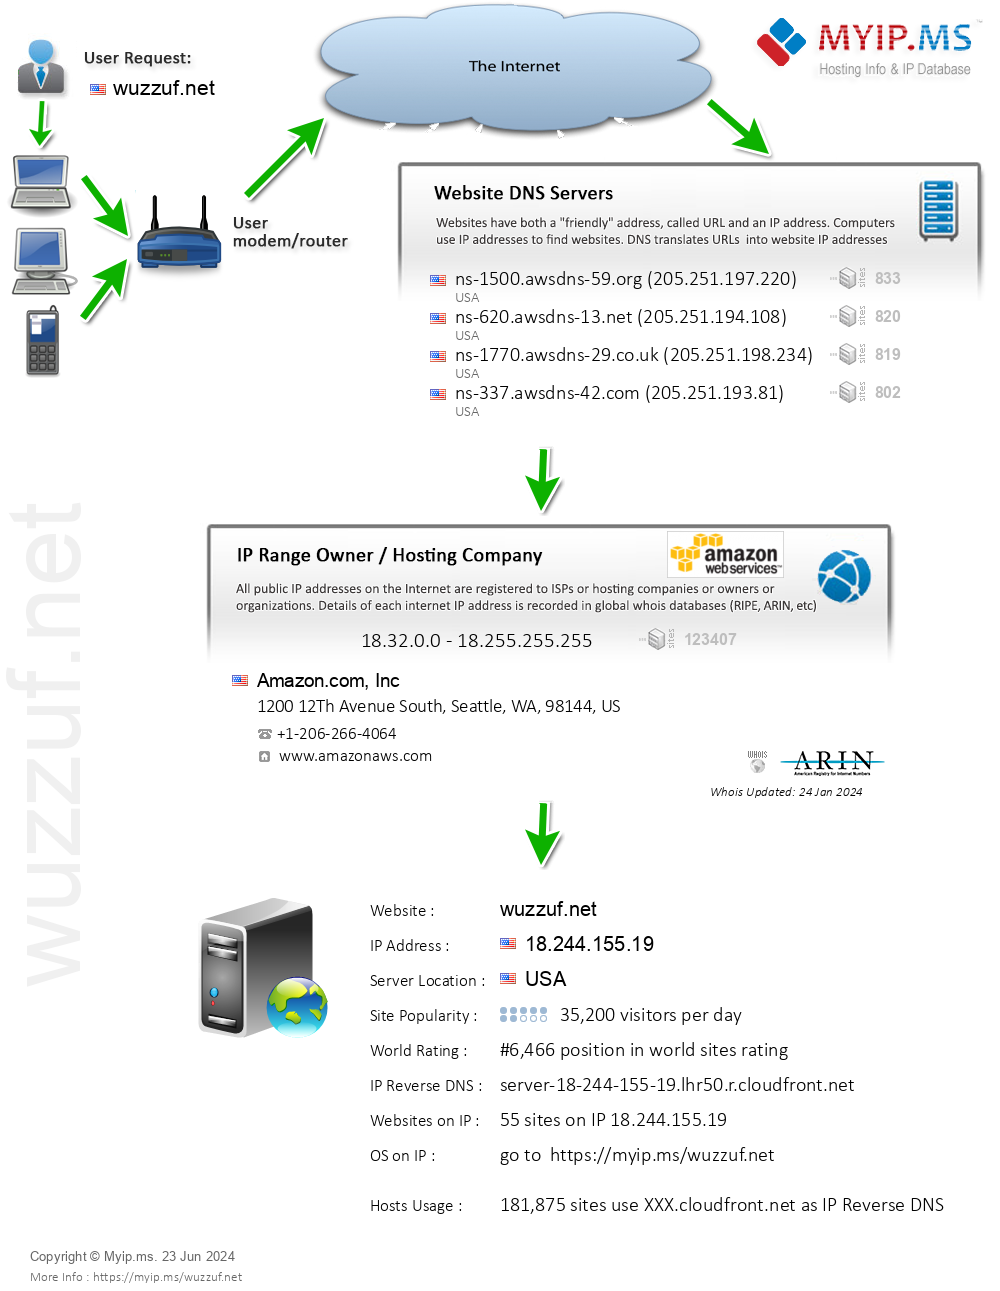 Wuzzuf.net - Website Hosting Visual IP Diagram